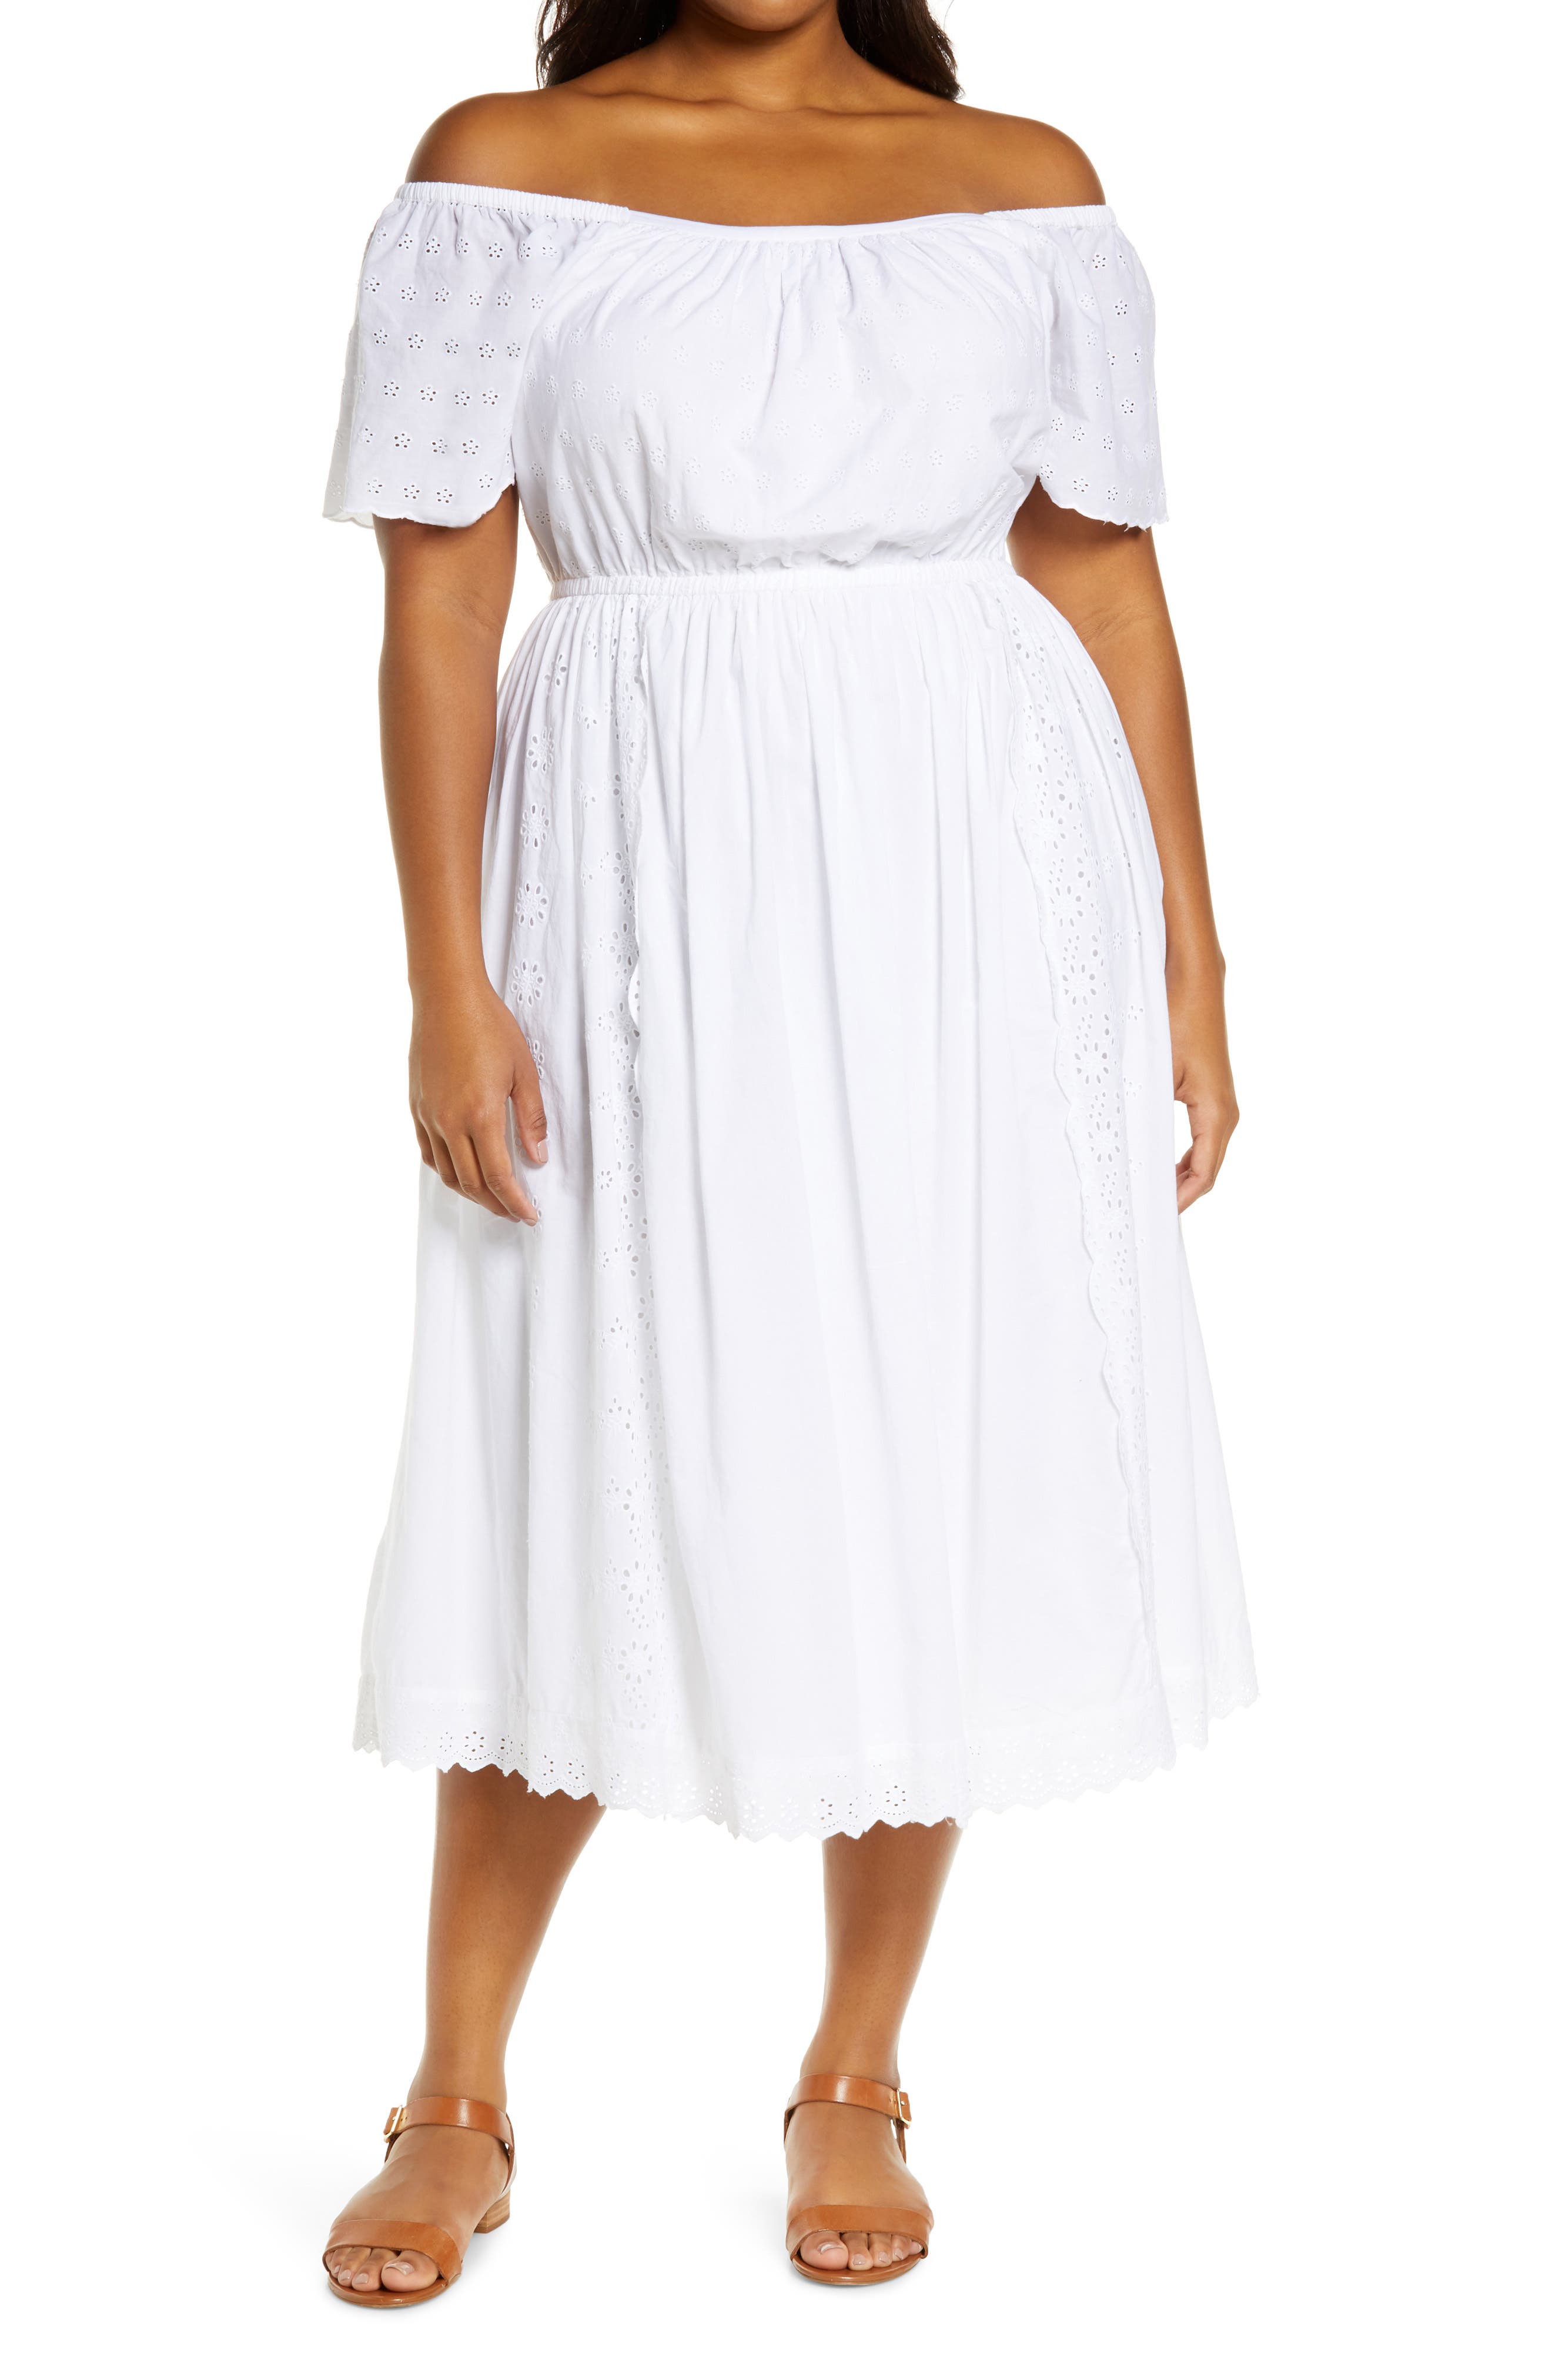 white dress size 16w